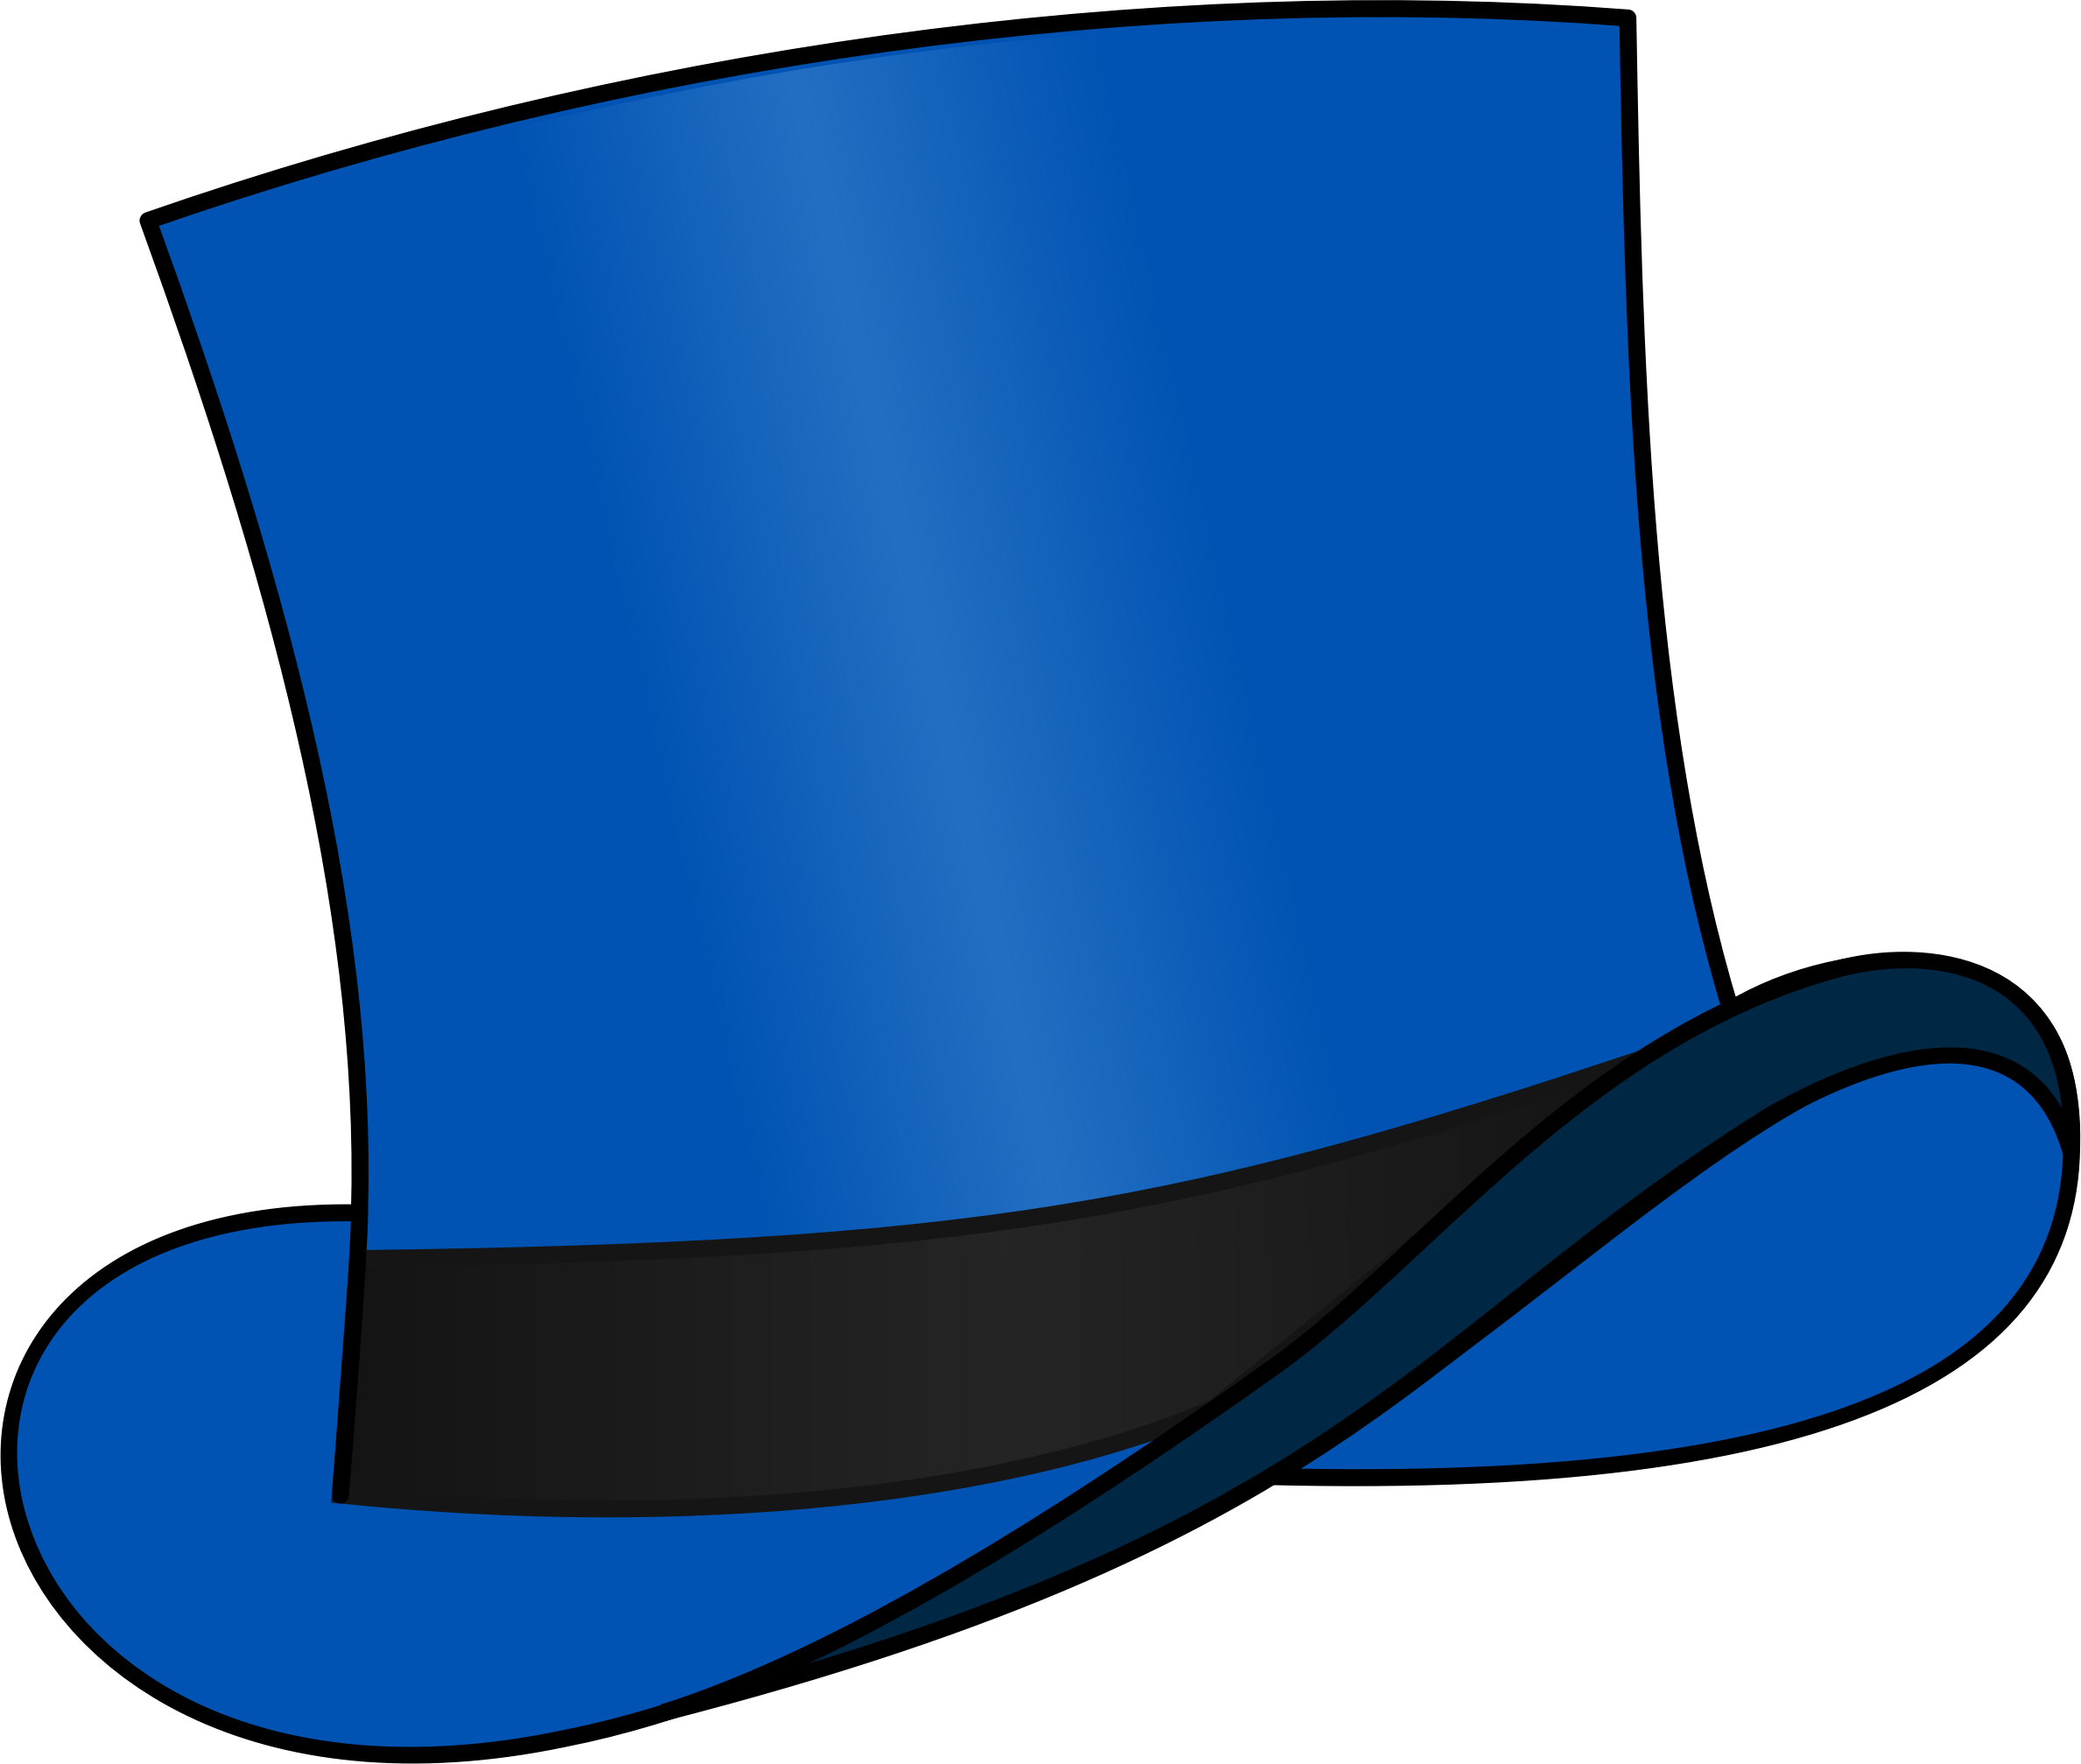 Шляпа картинка на прозрачном фоне. Синяя шляпа де Боно. Шляпа мультяшная. Шляпки мультяшные. Шляпа цилиндр синий.